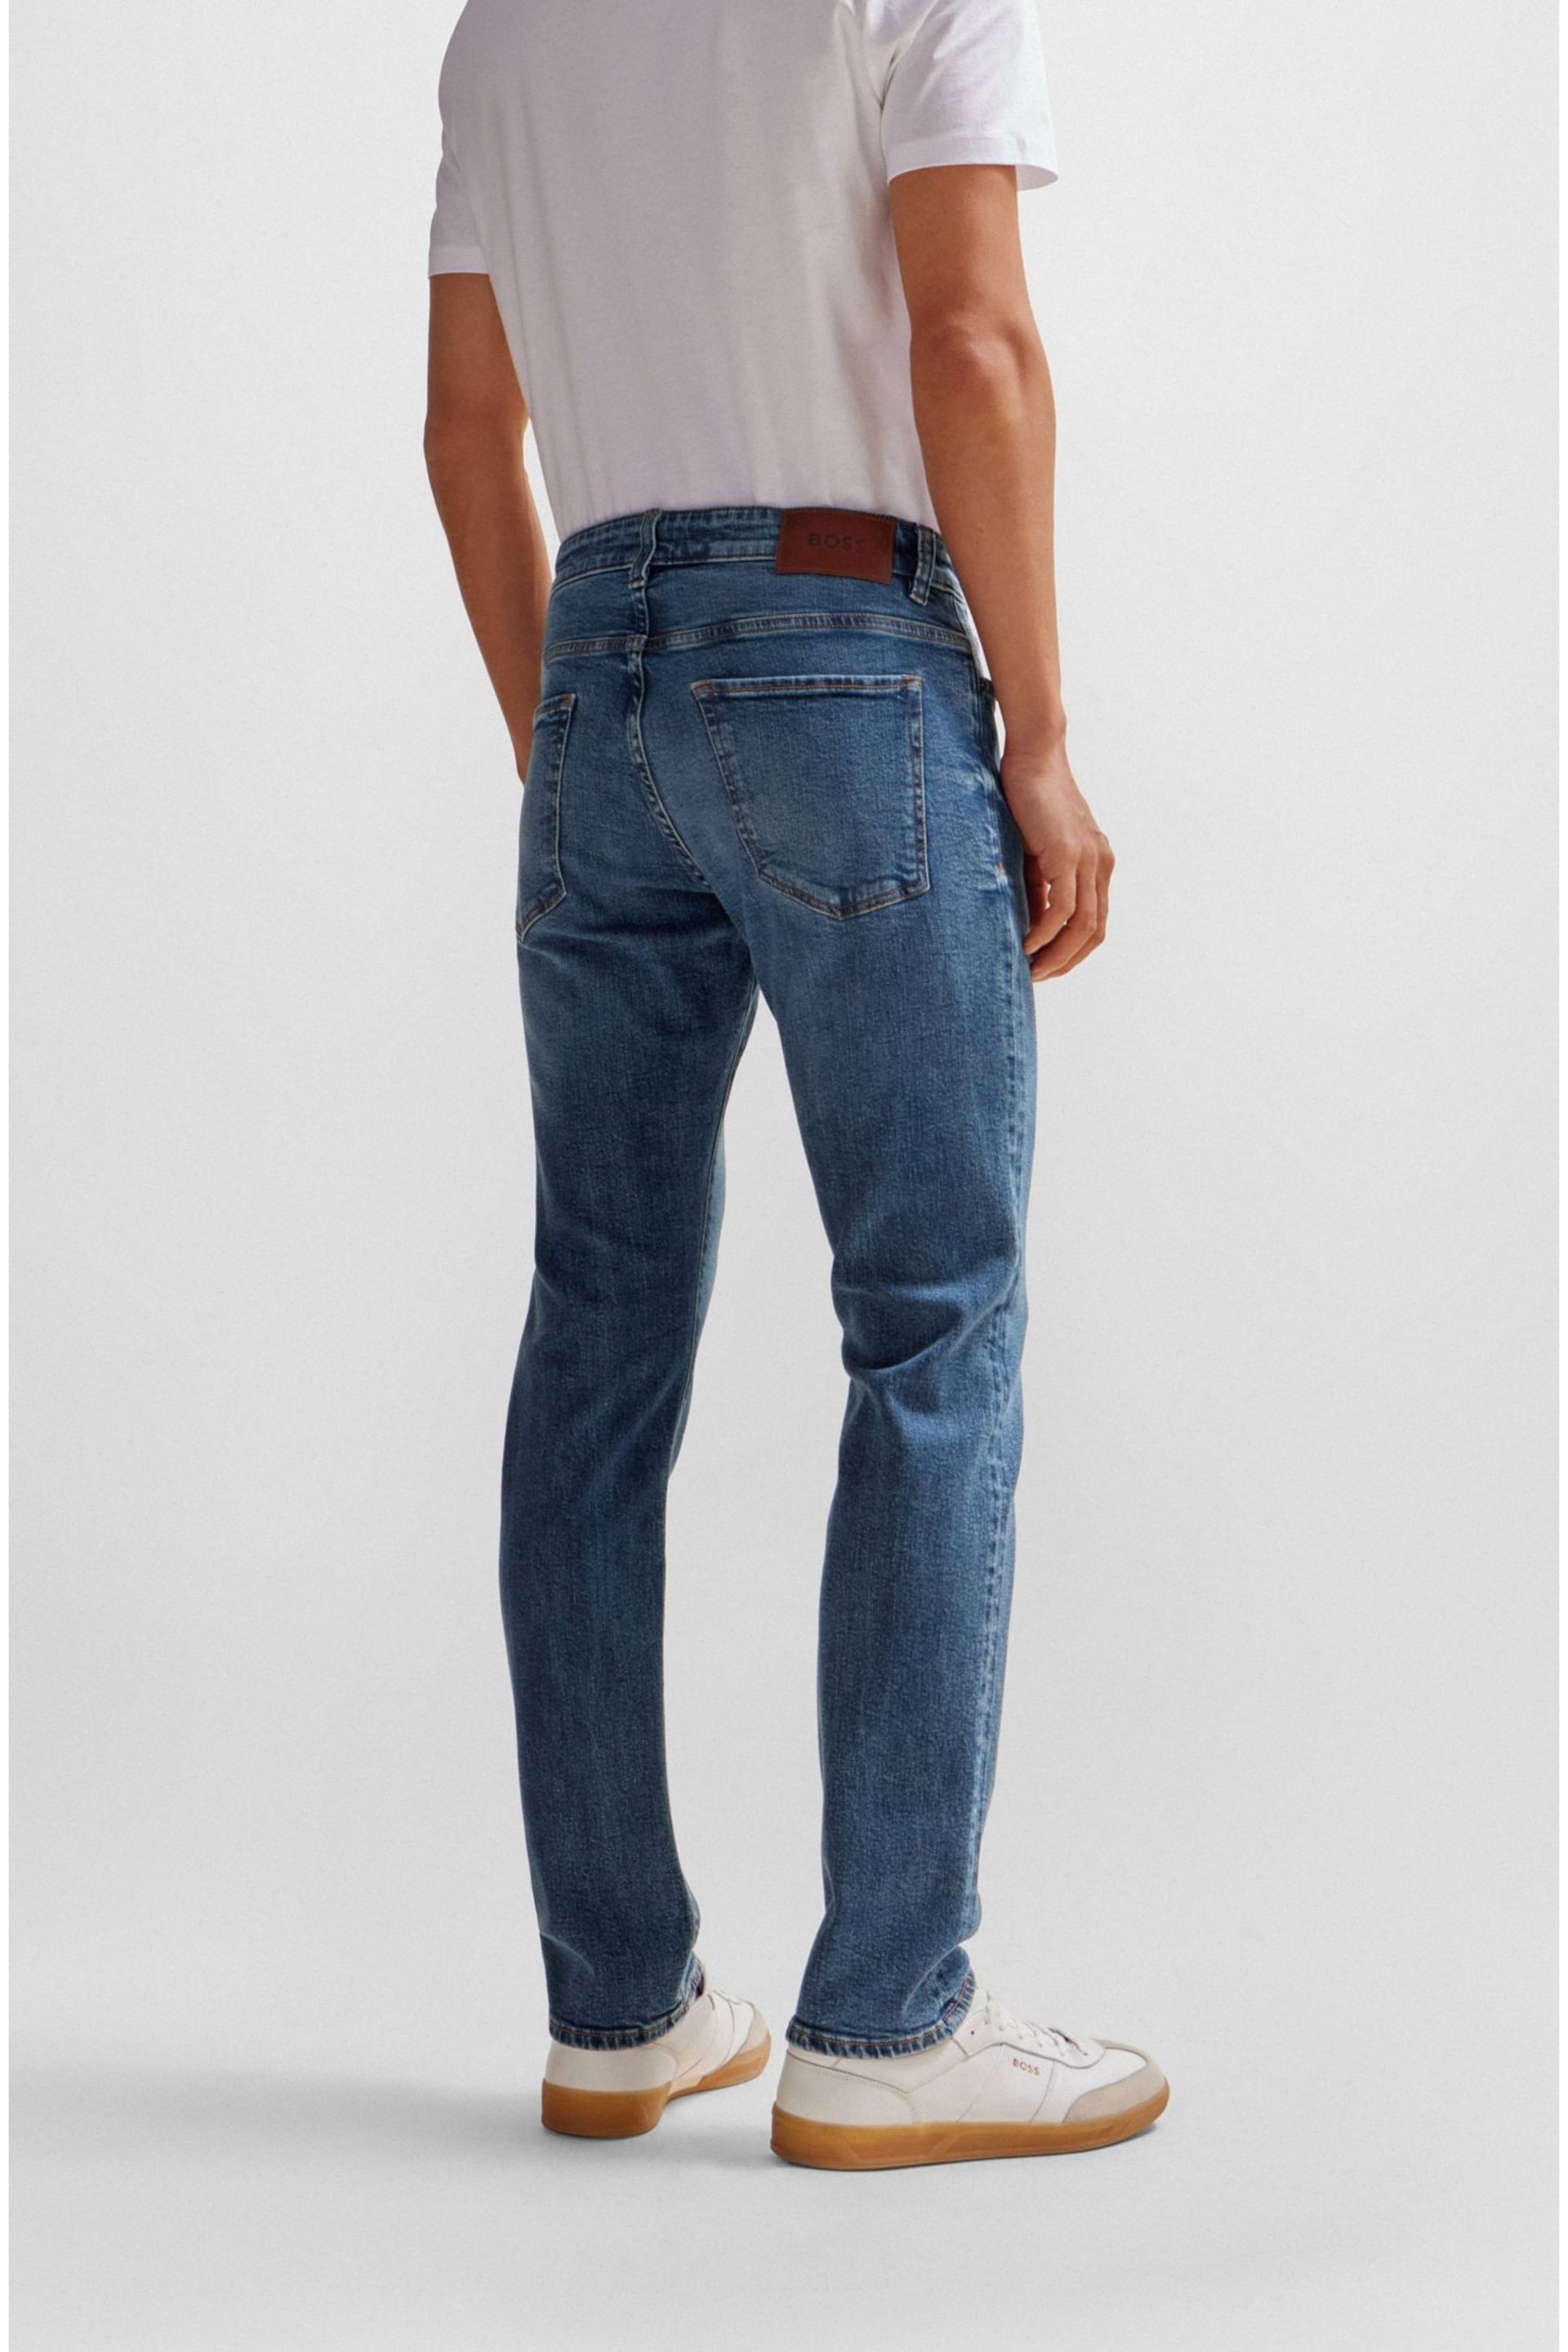 BOSS Blue Denim Delaware Slim Fit Stretch Jeans - Image 2 of 5